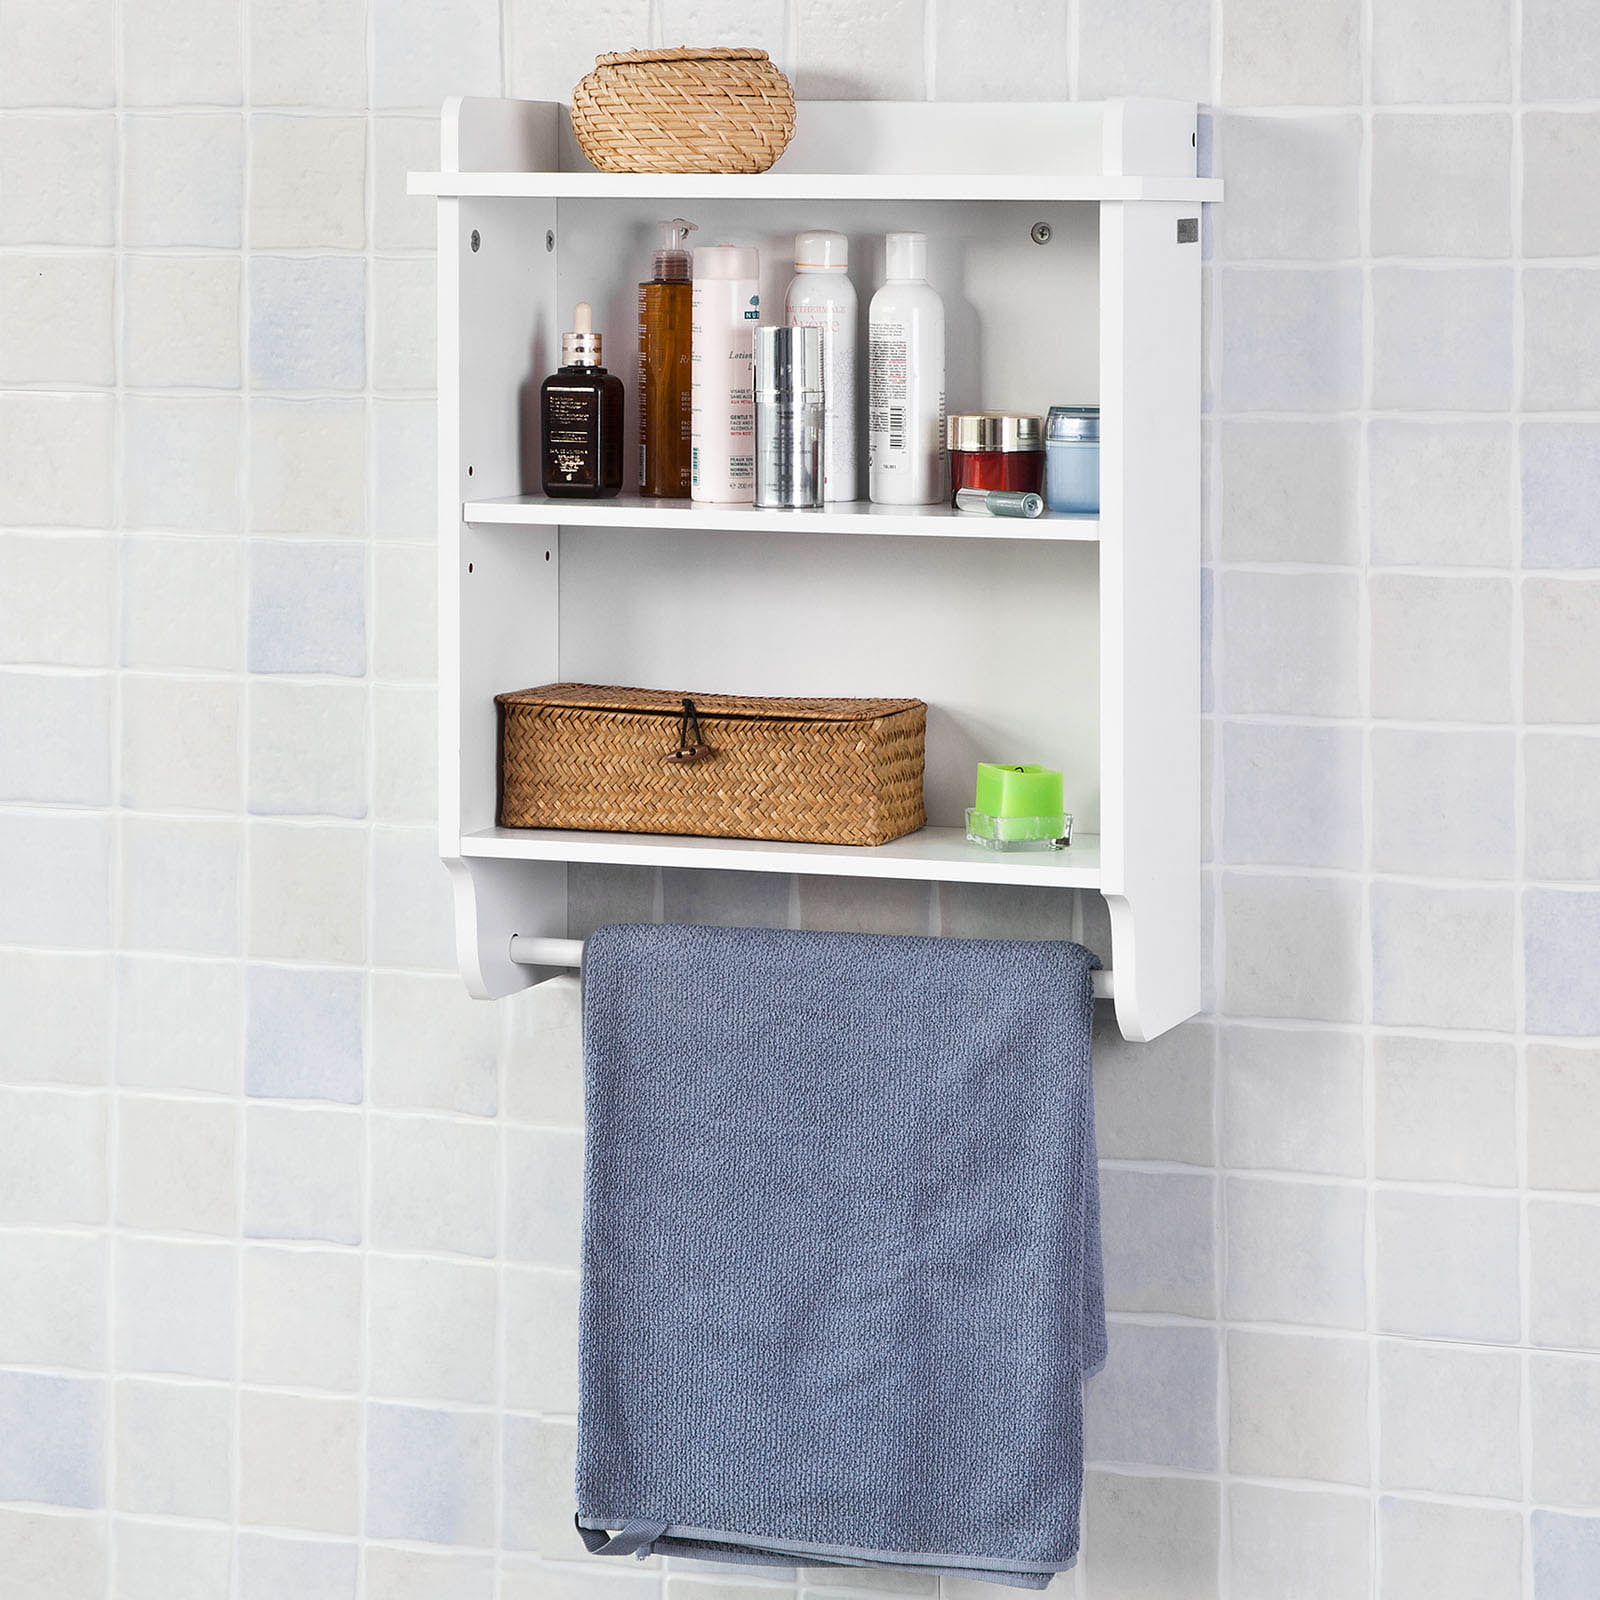 Haotian Frg239 W Wall Mounted Bathroom Shelf Kitchen Cabinet